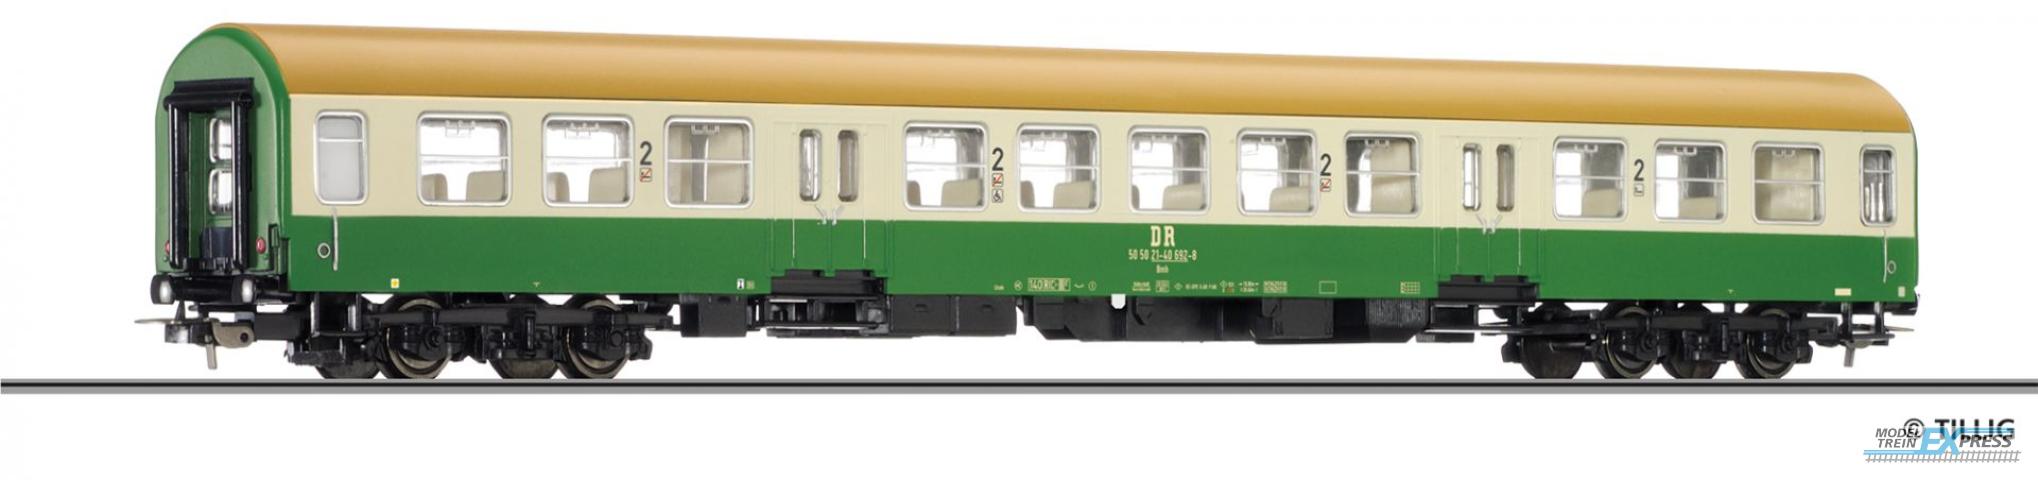 Tillig 74980 Reisezugwagen 2. Klasse Bmh, Bauart Halberstadt, der DR, 2. Betriebsnummer, Ep. IV